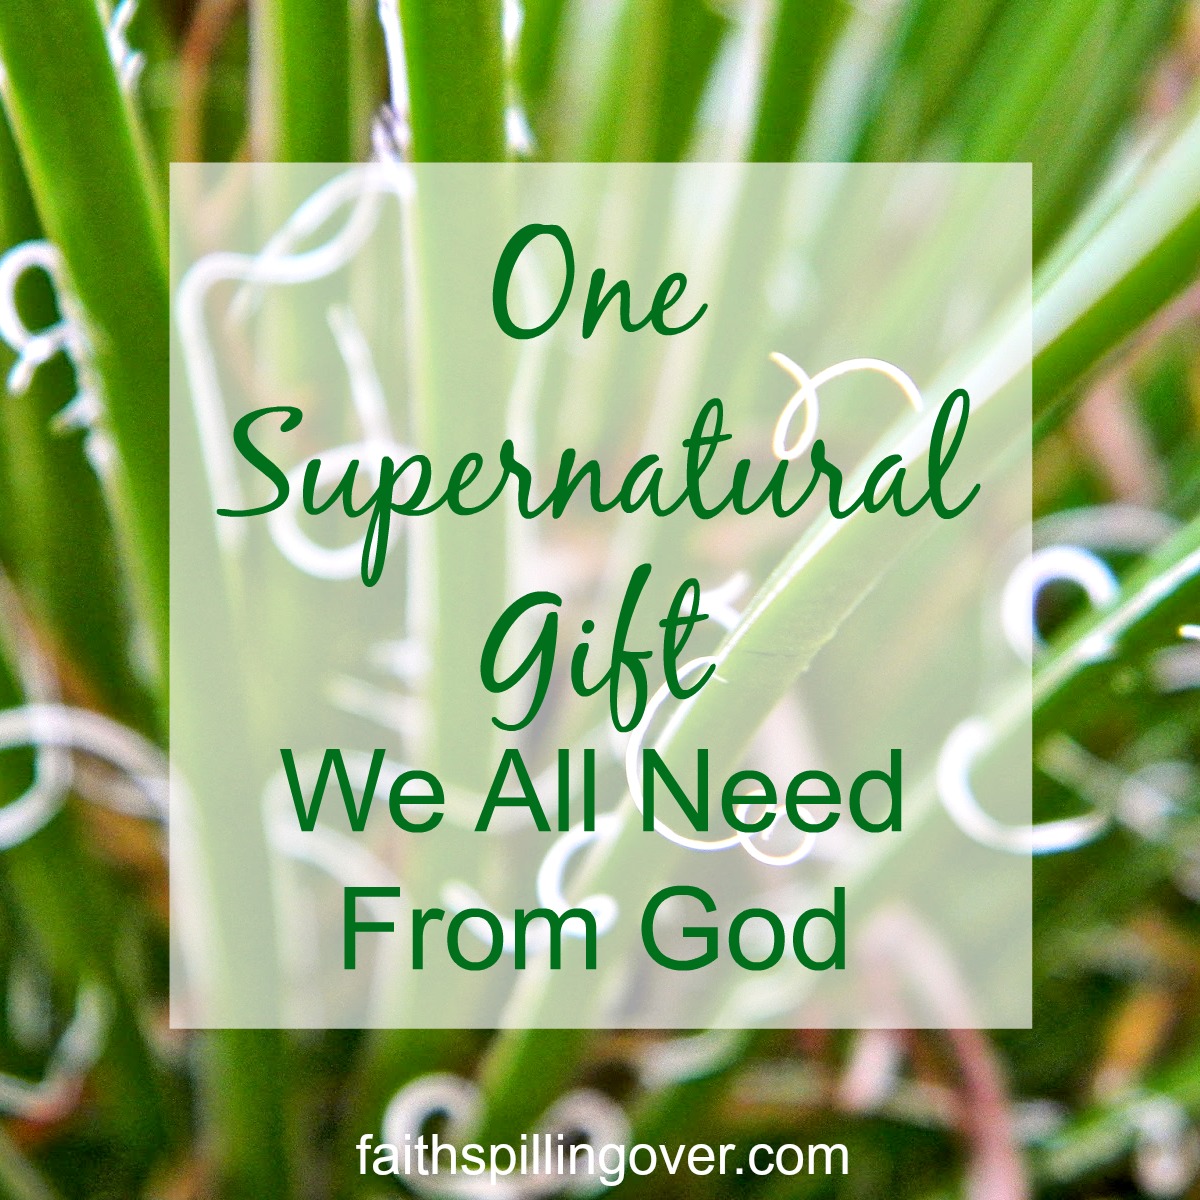 One supernatural gift